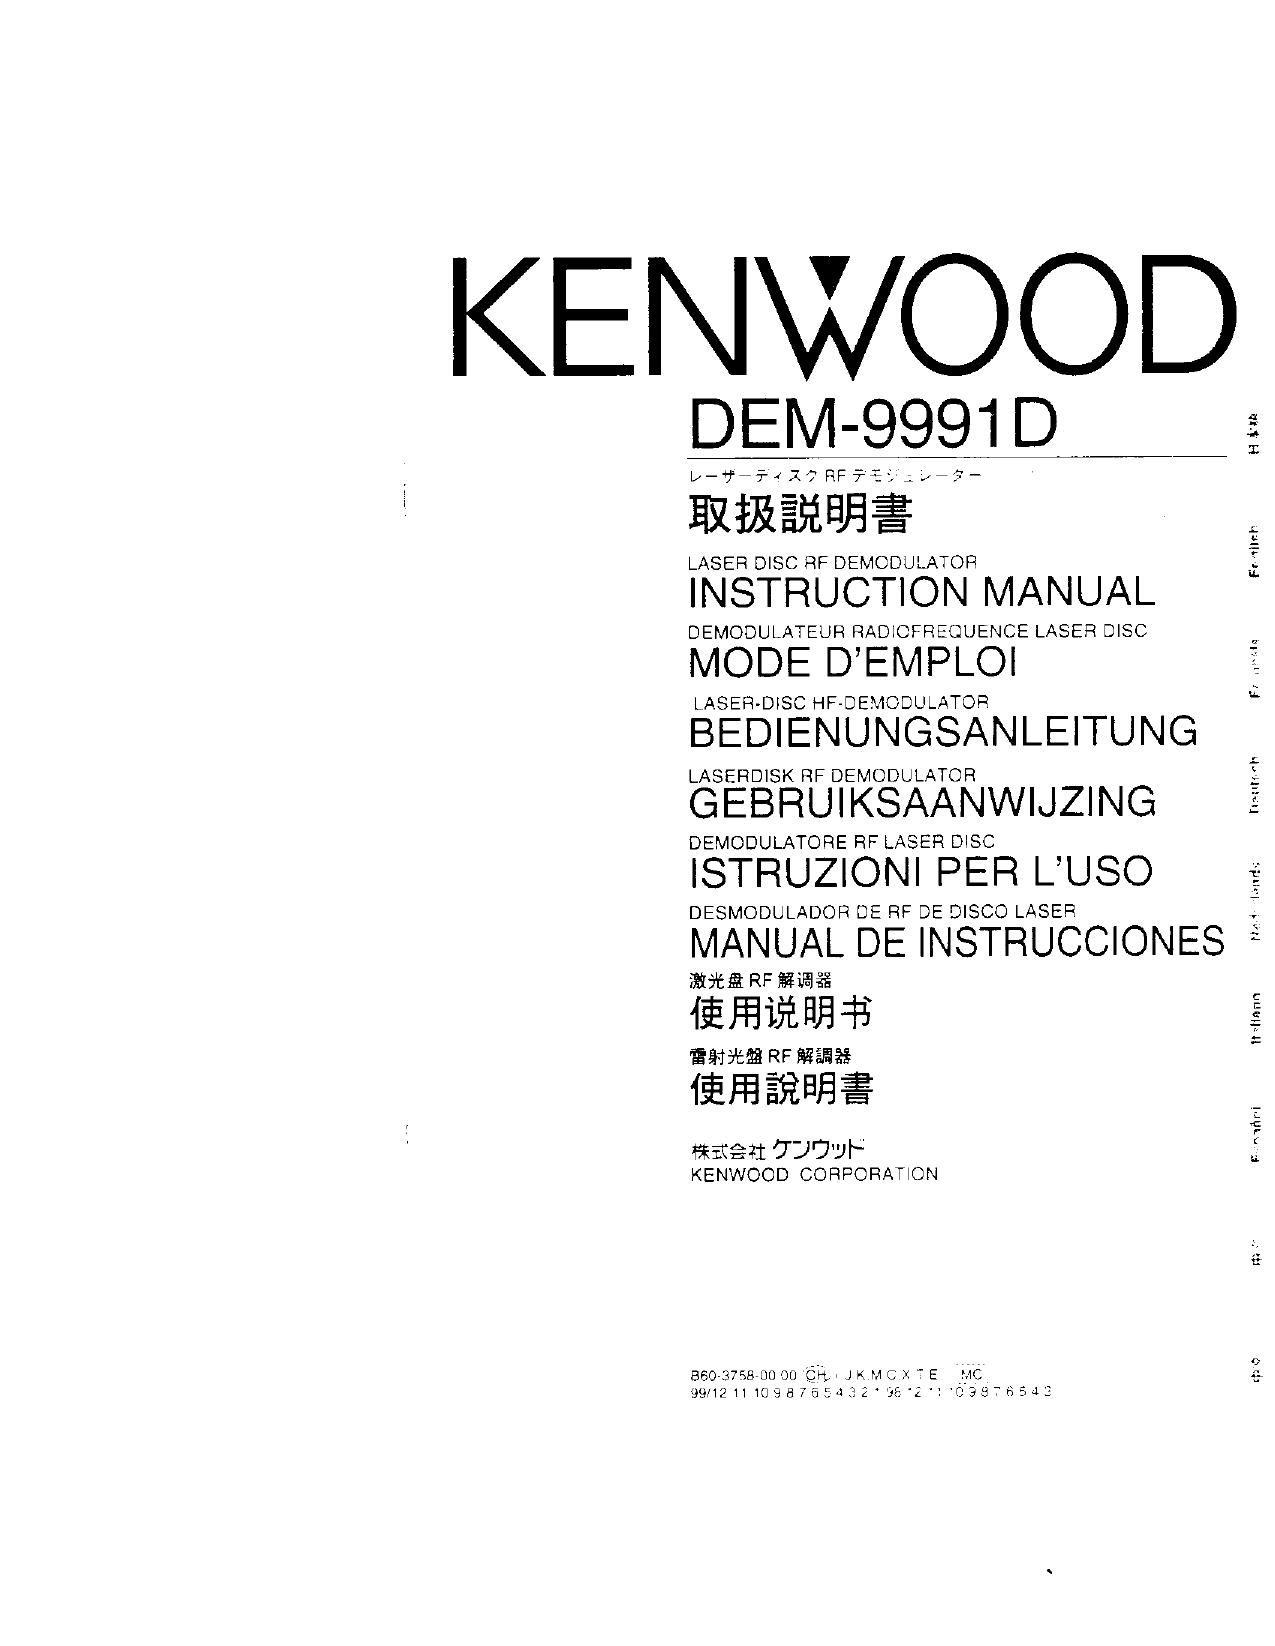 Kenwood DEM 9991 D Owners Manual